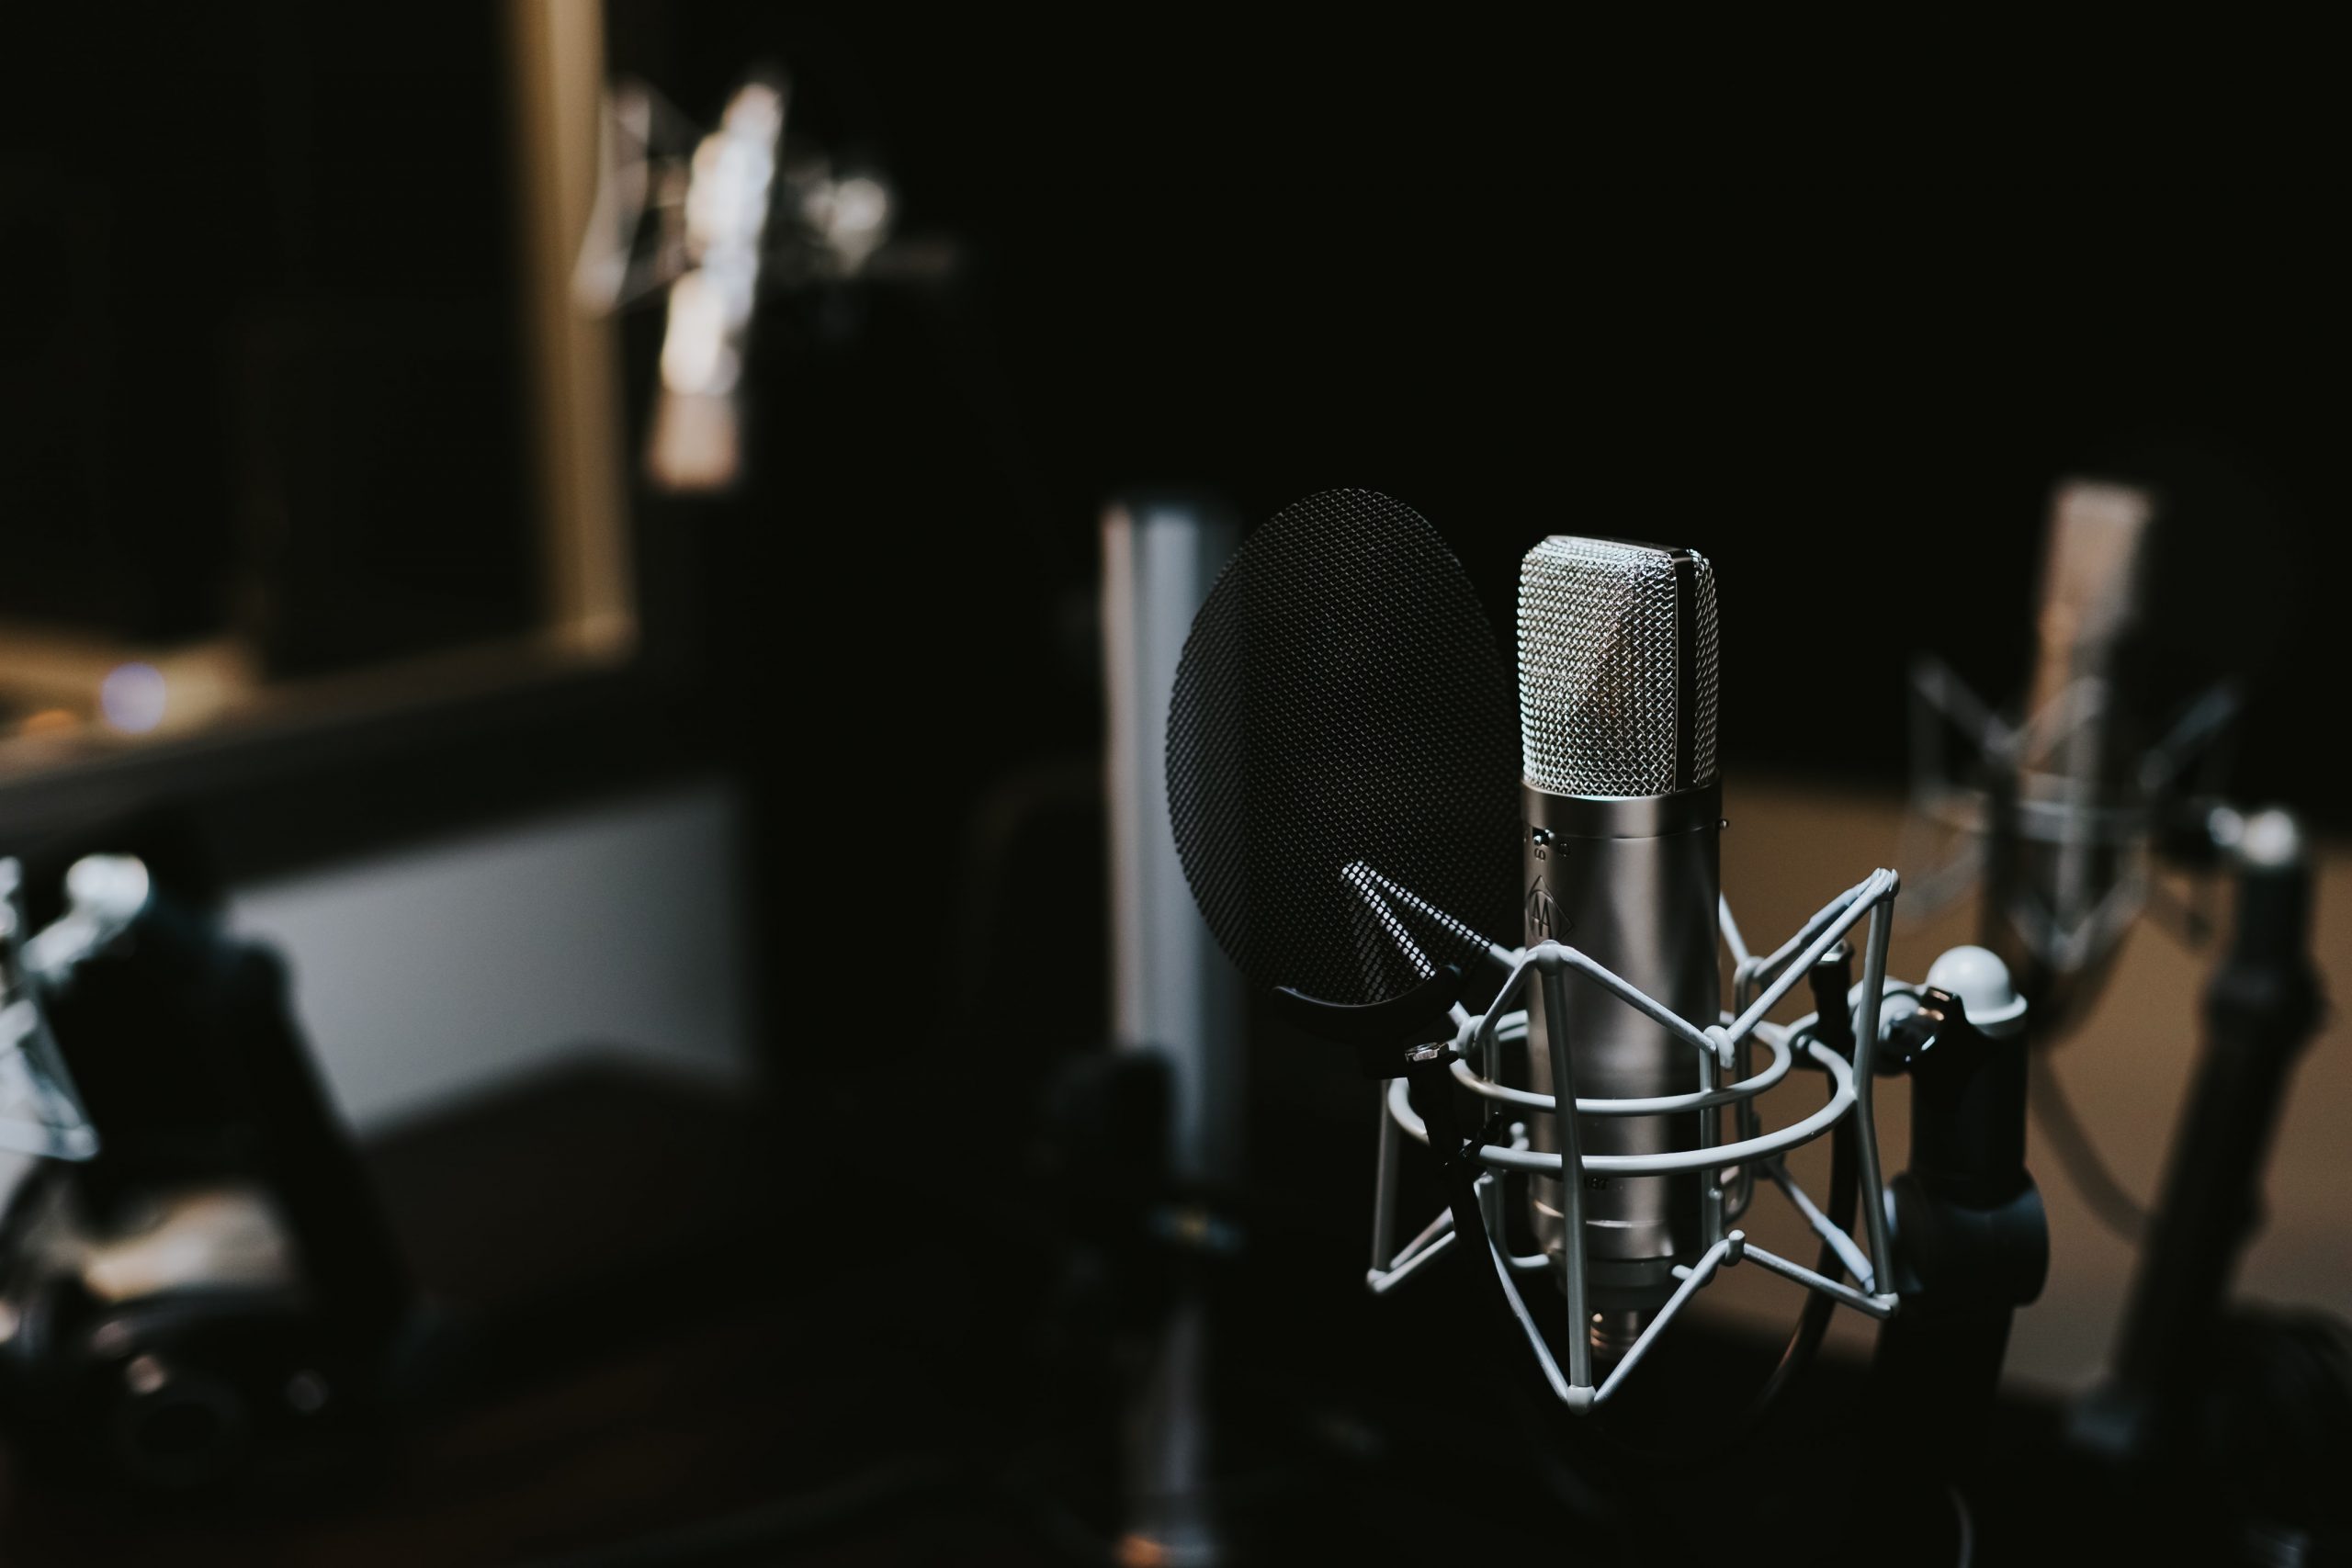 microphone in recording studio